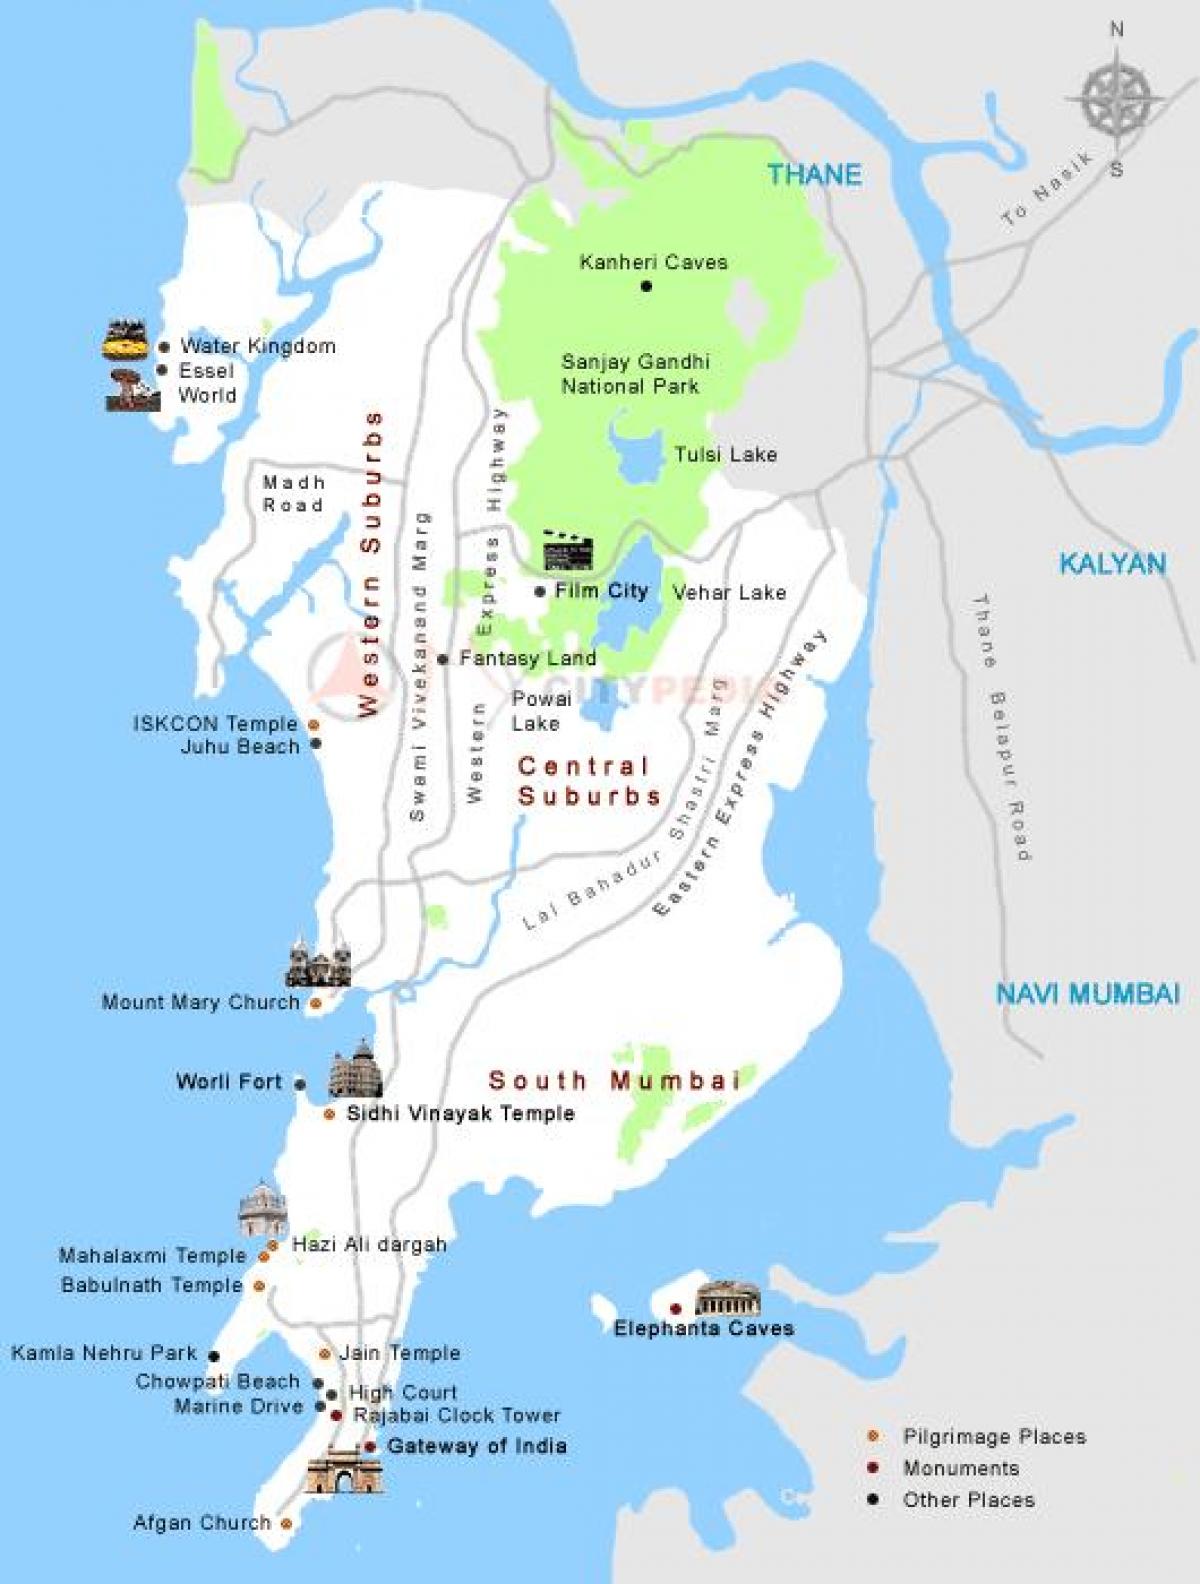 kort over Mumbai turist steder